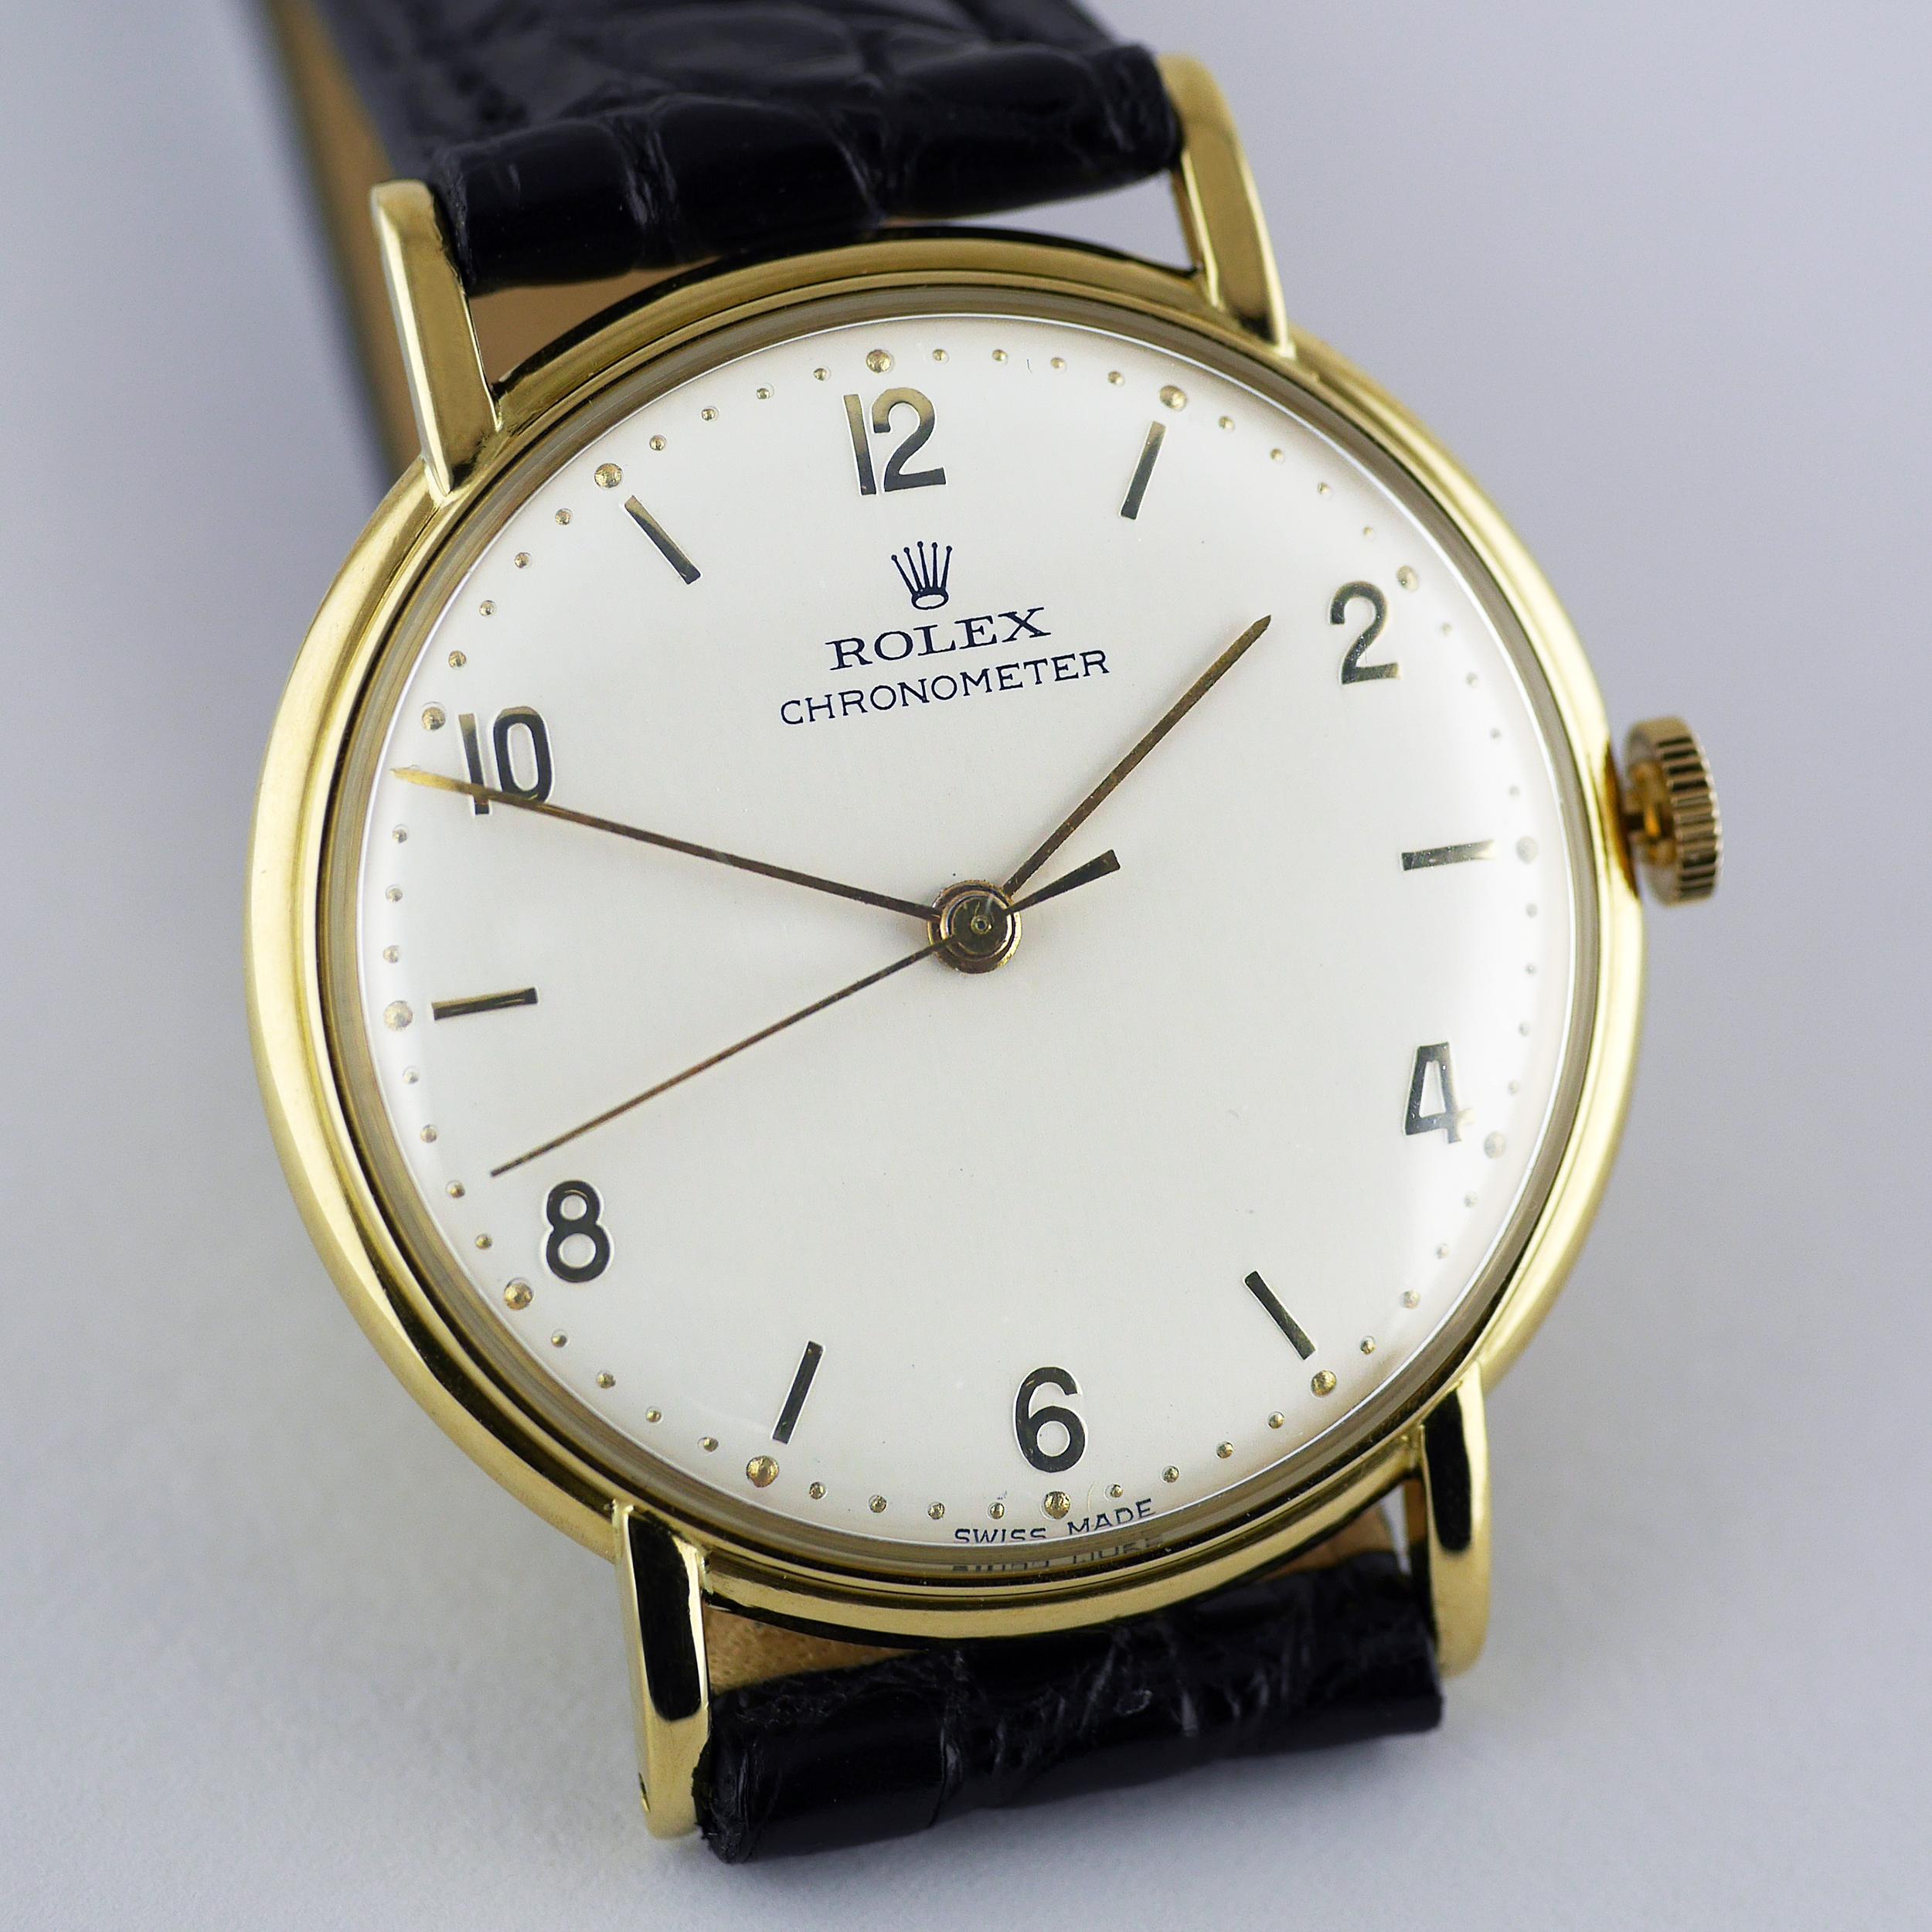 Vintage Rolex Precision wristwatch dated 1948.

Case Measurements:

Length (lug to lug): 41 mm 

Diameter: 34 mm 

Depth: 9mm